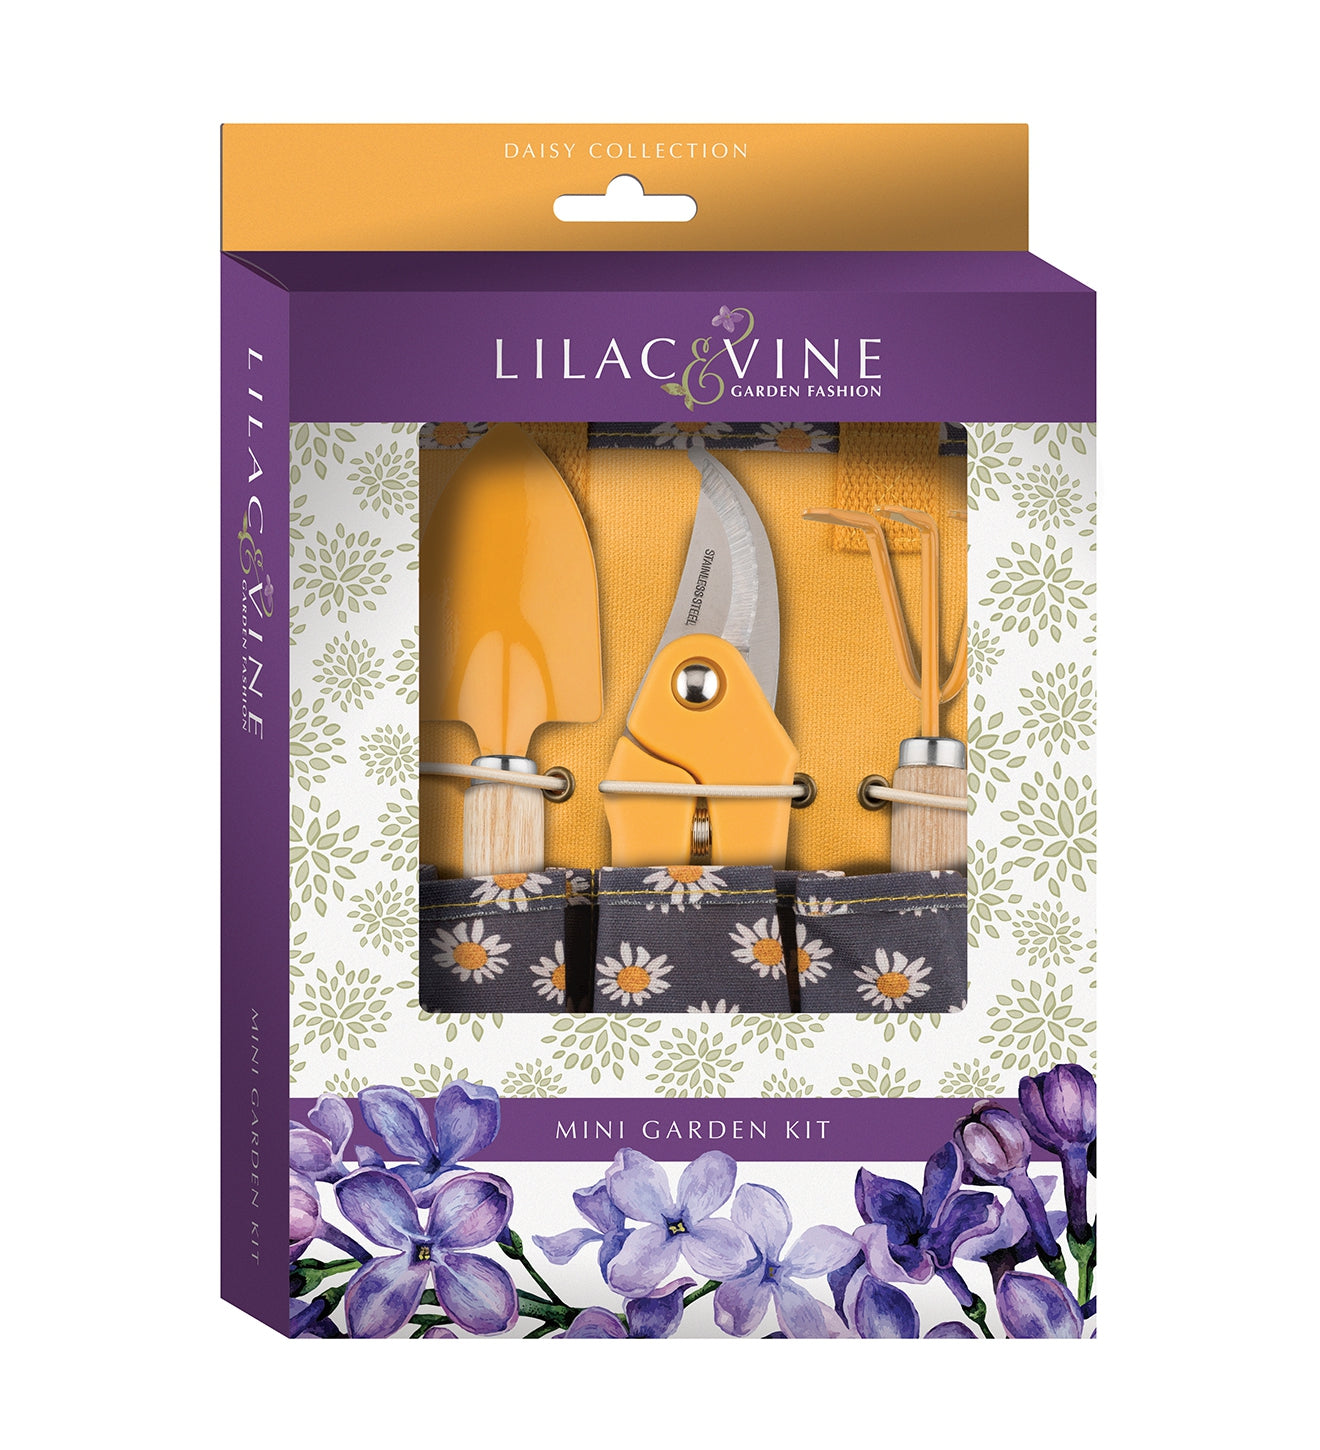 Lilac & Vine Daisy Garden Mini Garden Kit Set/4 Outdoor Garden Tools Bag Pruner Cultivator Trowel